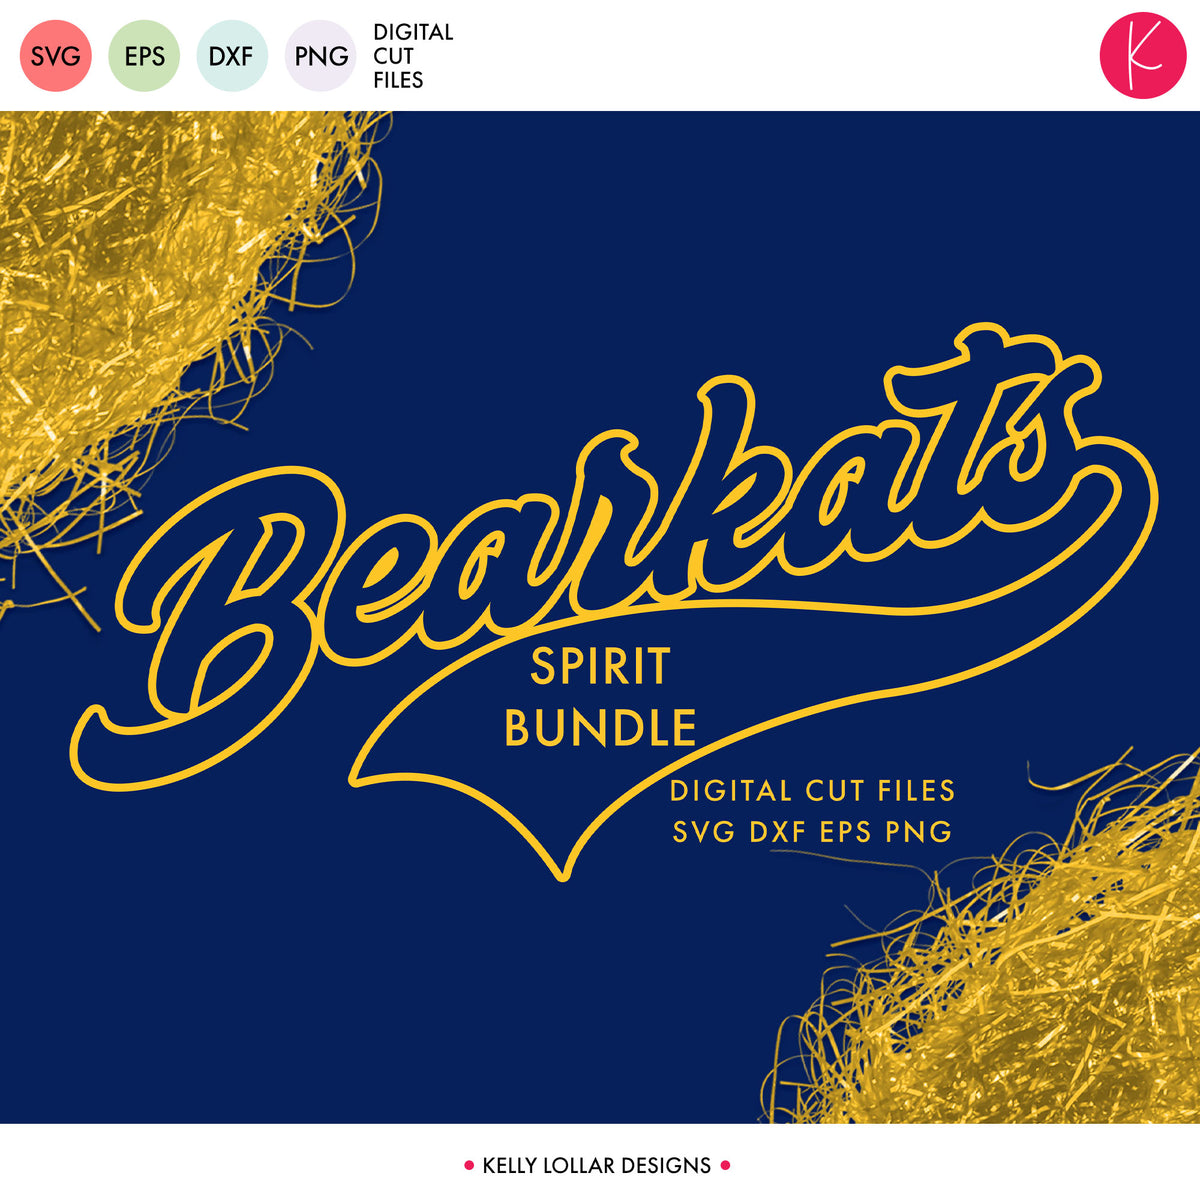 Bearkats Everything Spirit Bundle | SVG DXF EPS PNG Cut Files